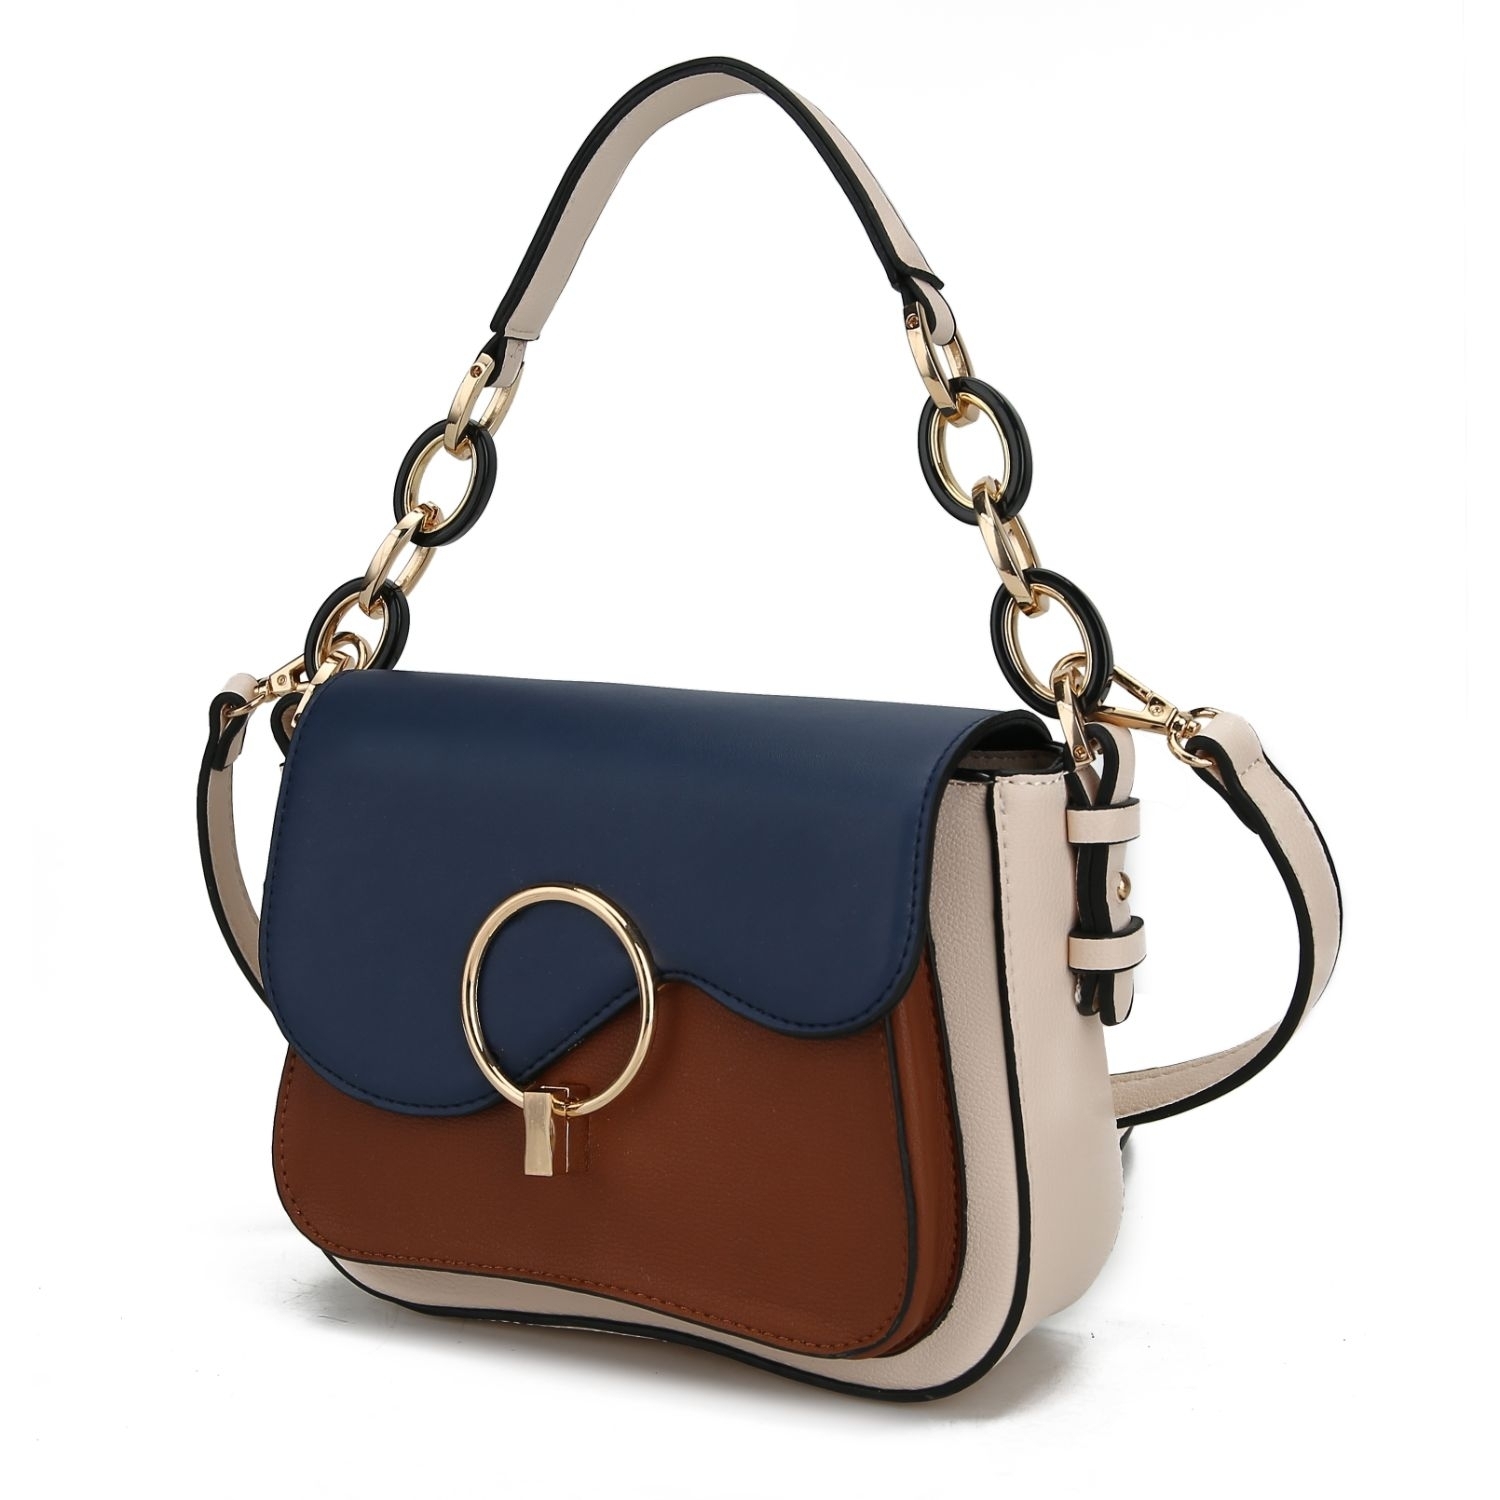 MKF Collection Fantasia Solid Crossbody Handbag By Mia K. - White Light Blue